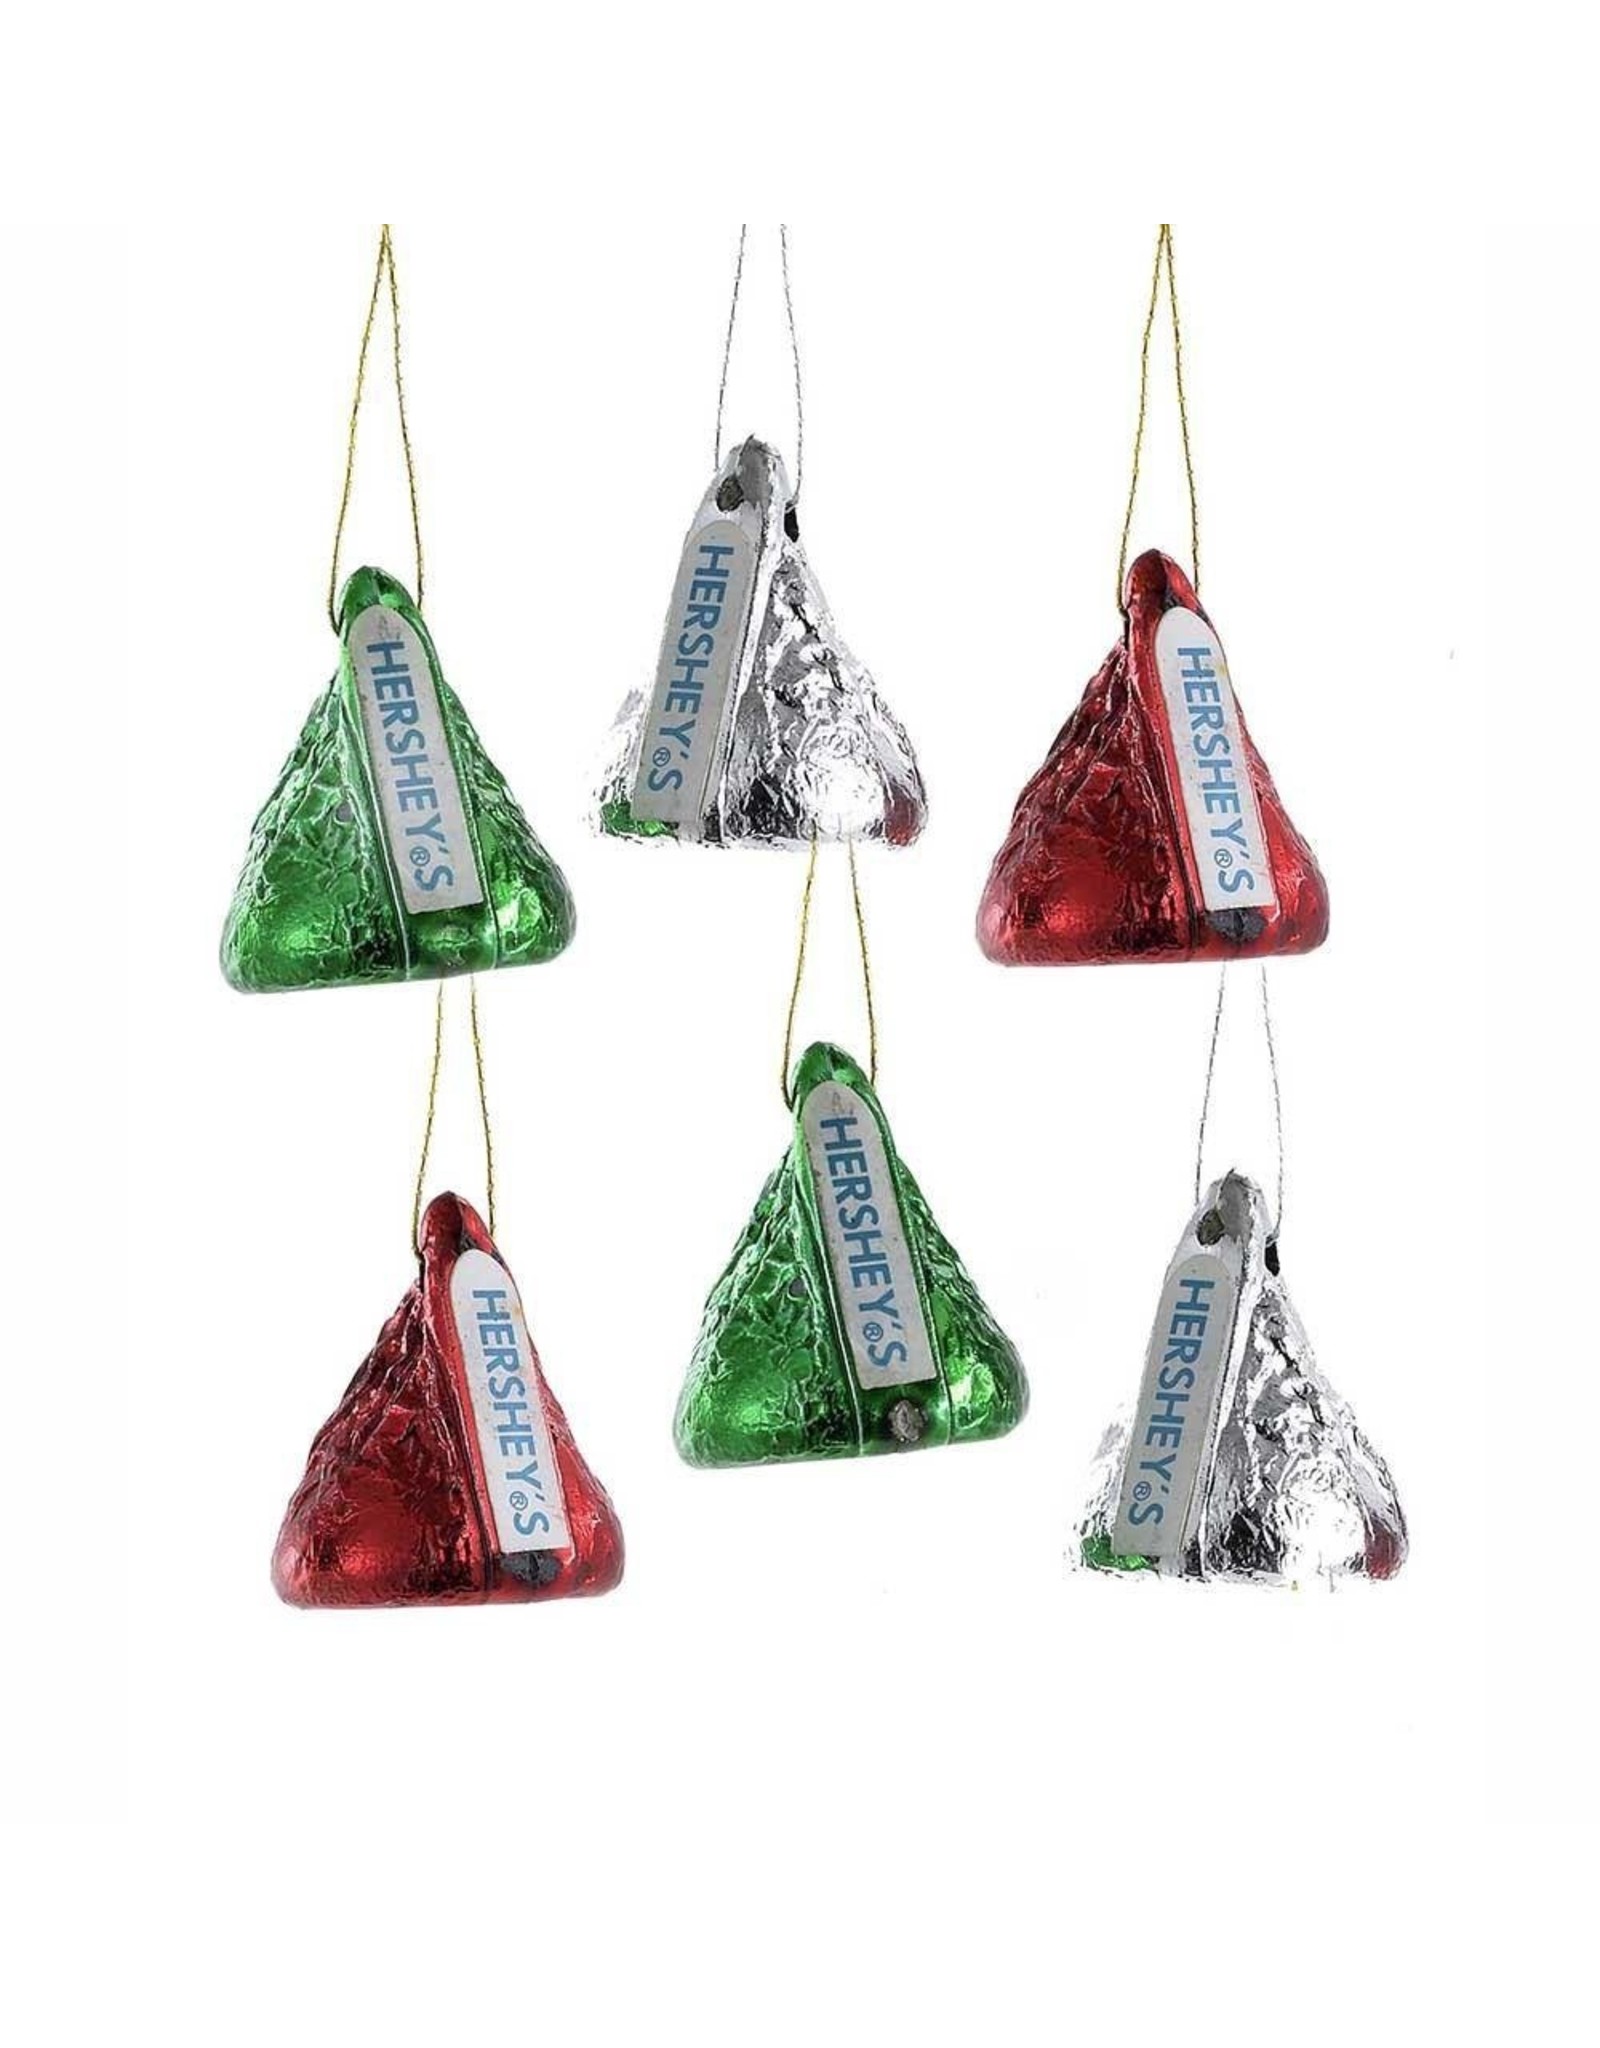 Kurt Adler Miniature Hershey Kisses 1 Inch Ornaments Set Of 6 Assorted